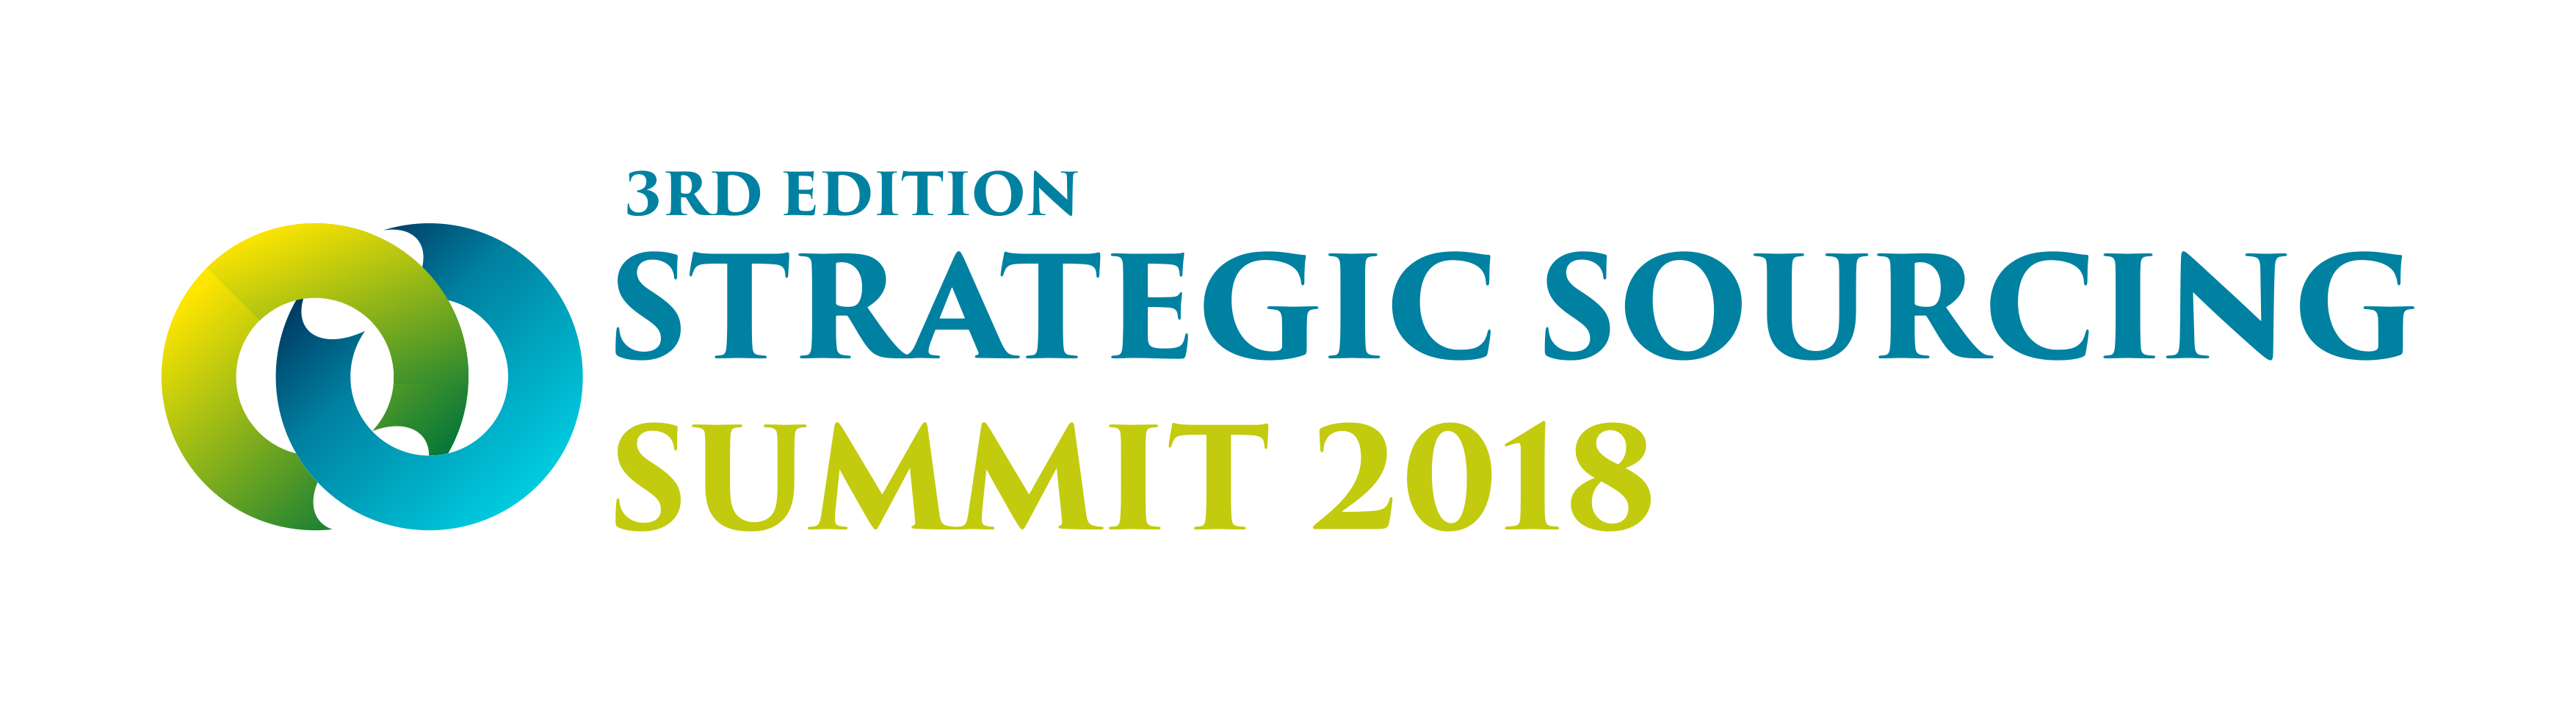 3rd Edition Strategic Sourcing Summit 2018